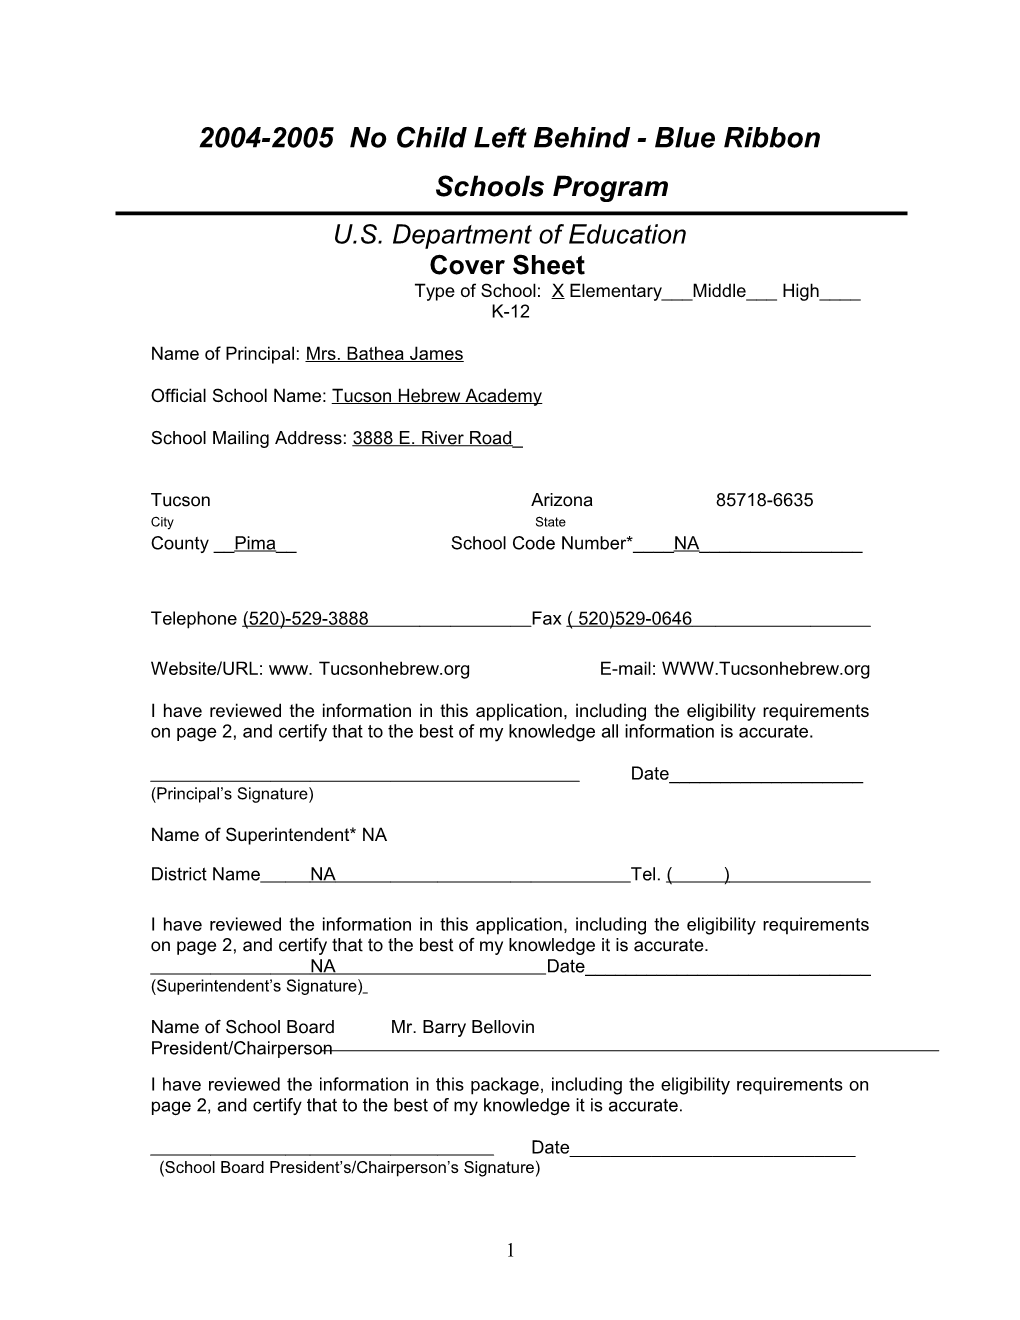 Tucson Hebrew Academy Application: 2004-2005, No Child Left Behind - Blue Ribbon Schools